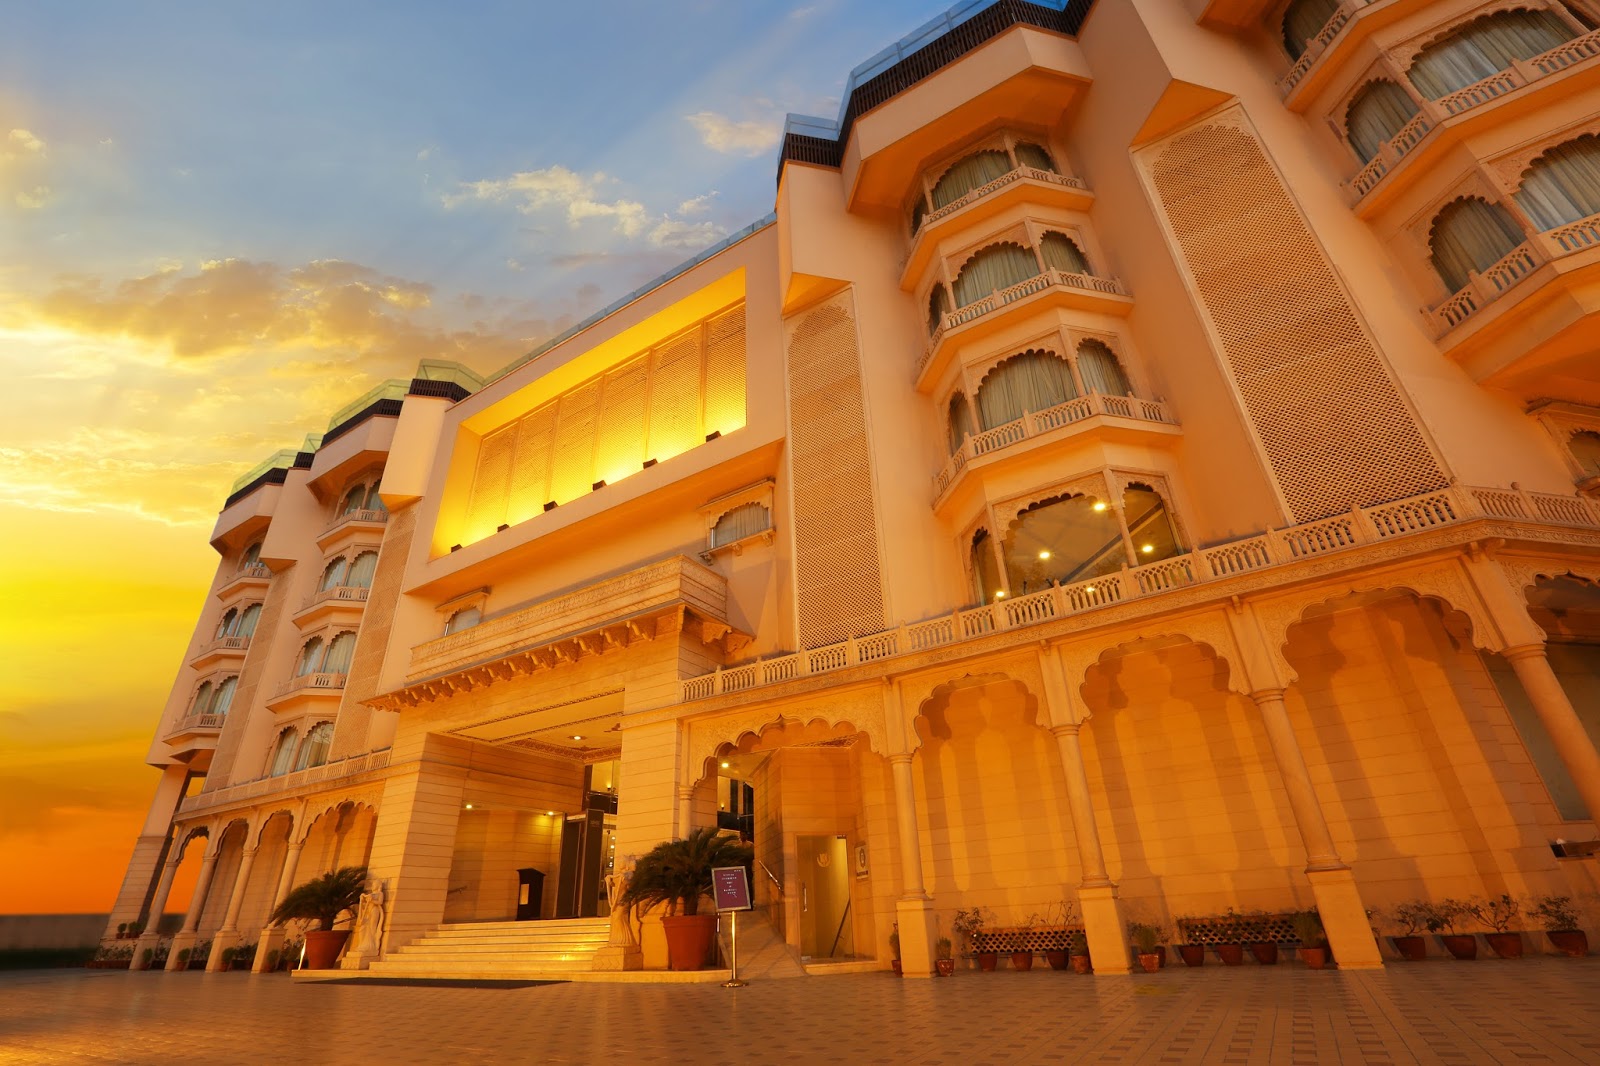 Golden Tulip Jaipur: Best Hotel In Jaipur, City Places Jaipur - Golden